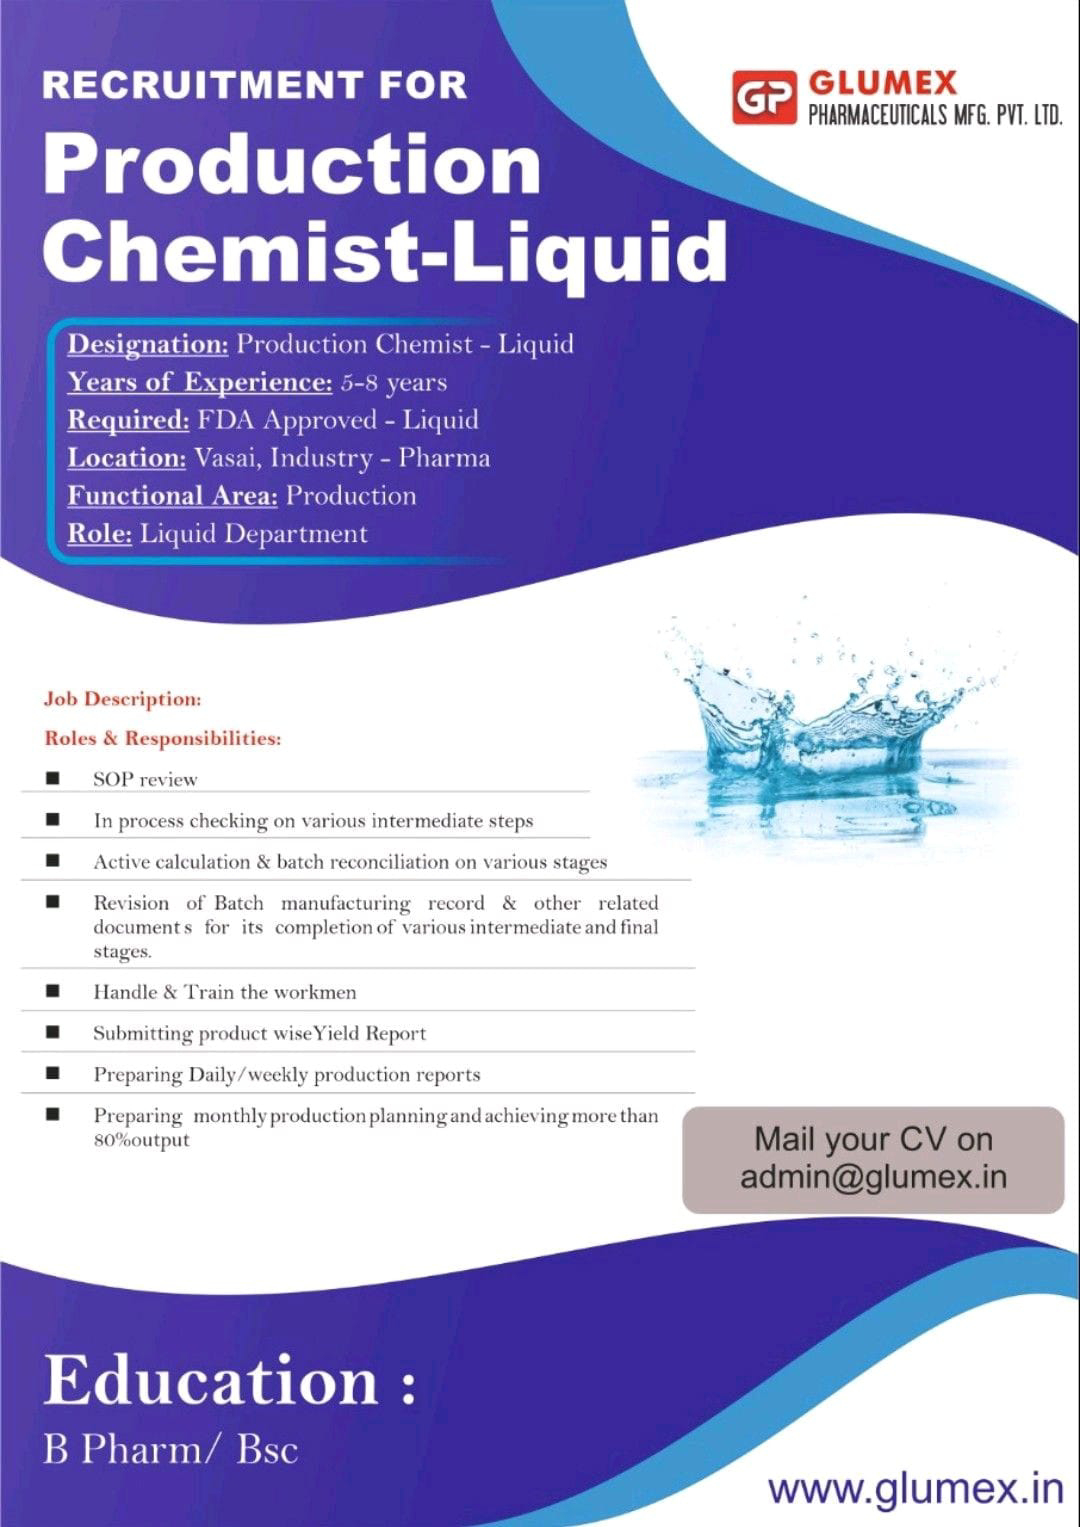 Job Availables, Glumex Pharmaceuticals Mfg Pvt Ltd Job Vacancy for Production Chemist-Liquid